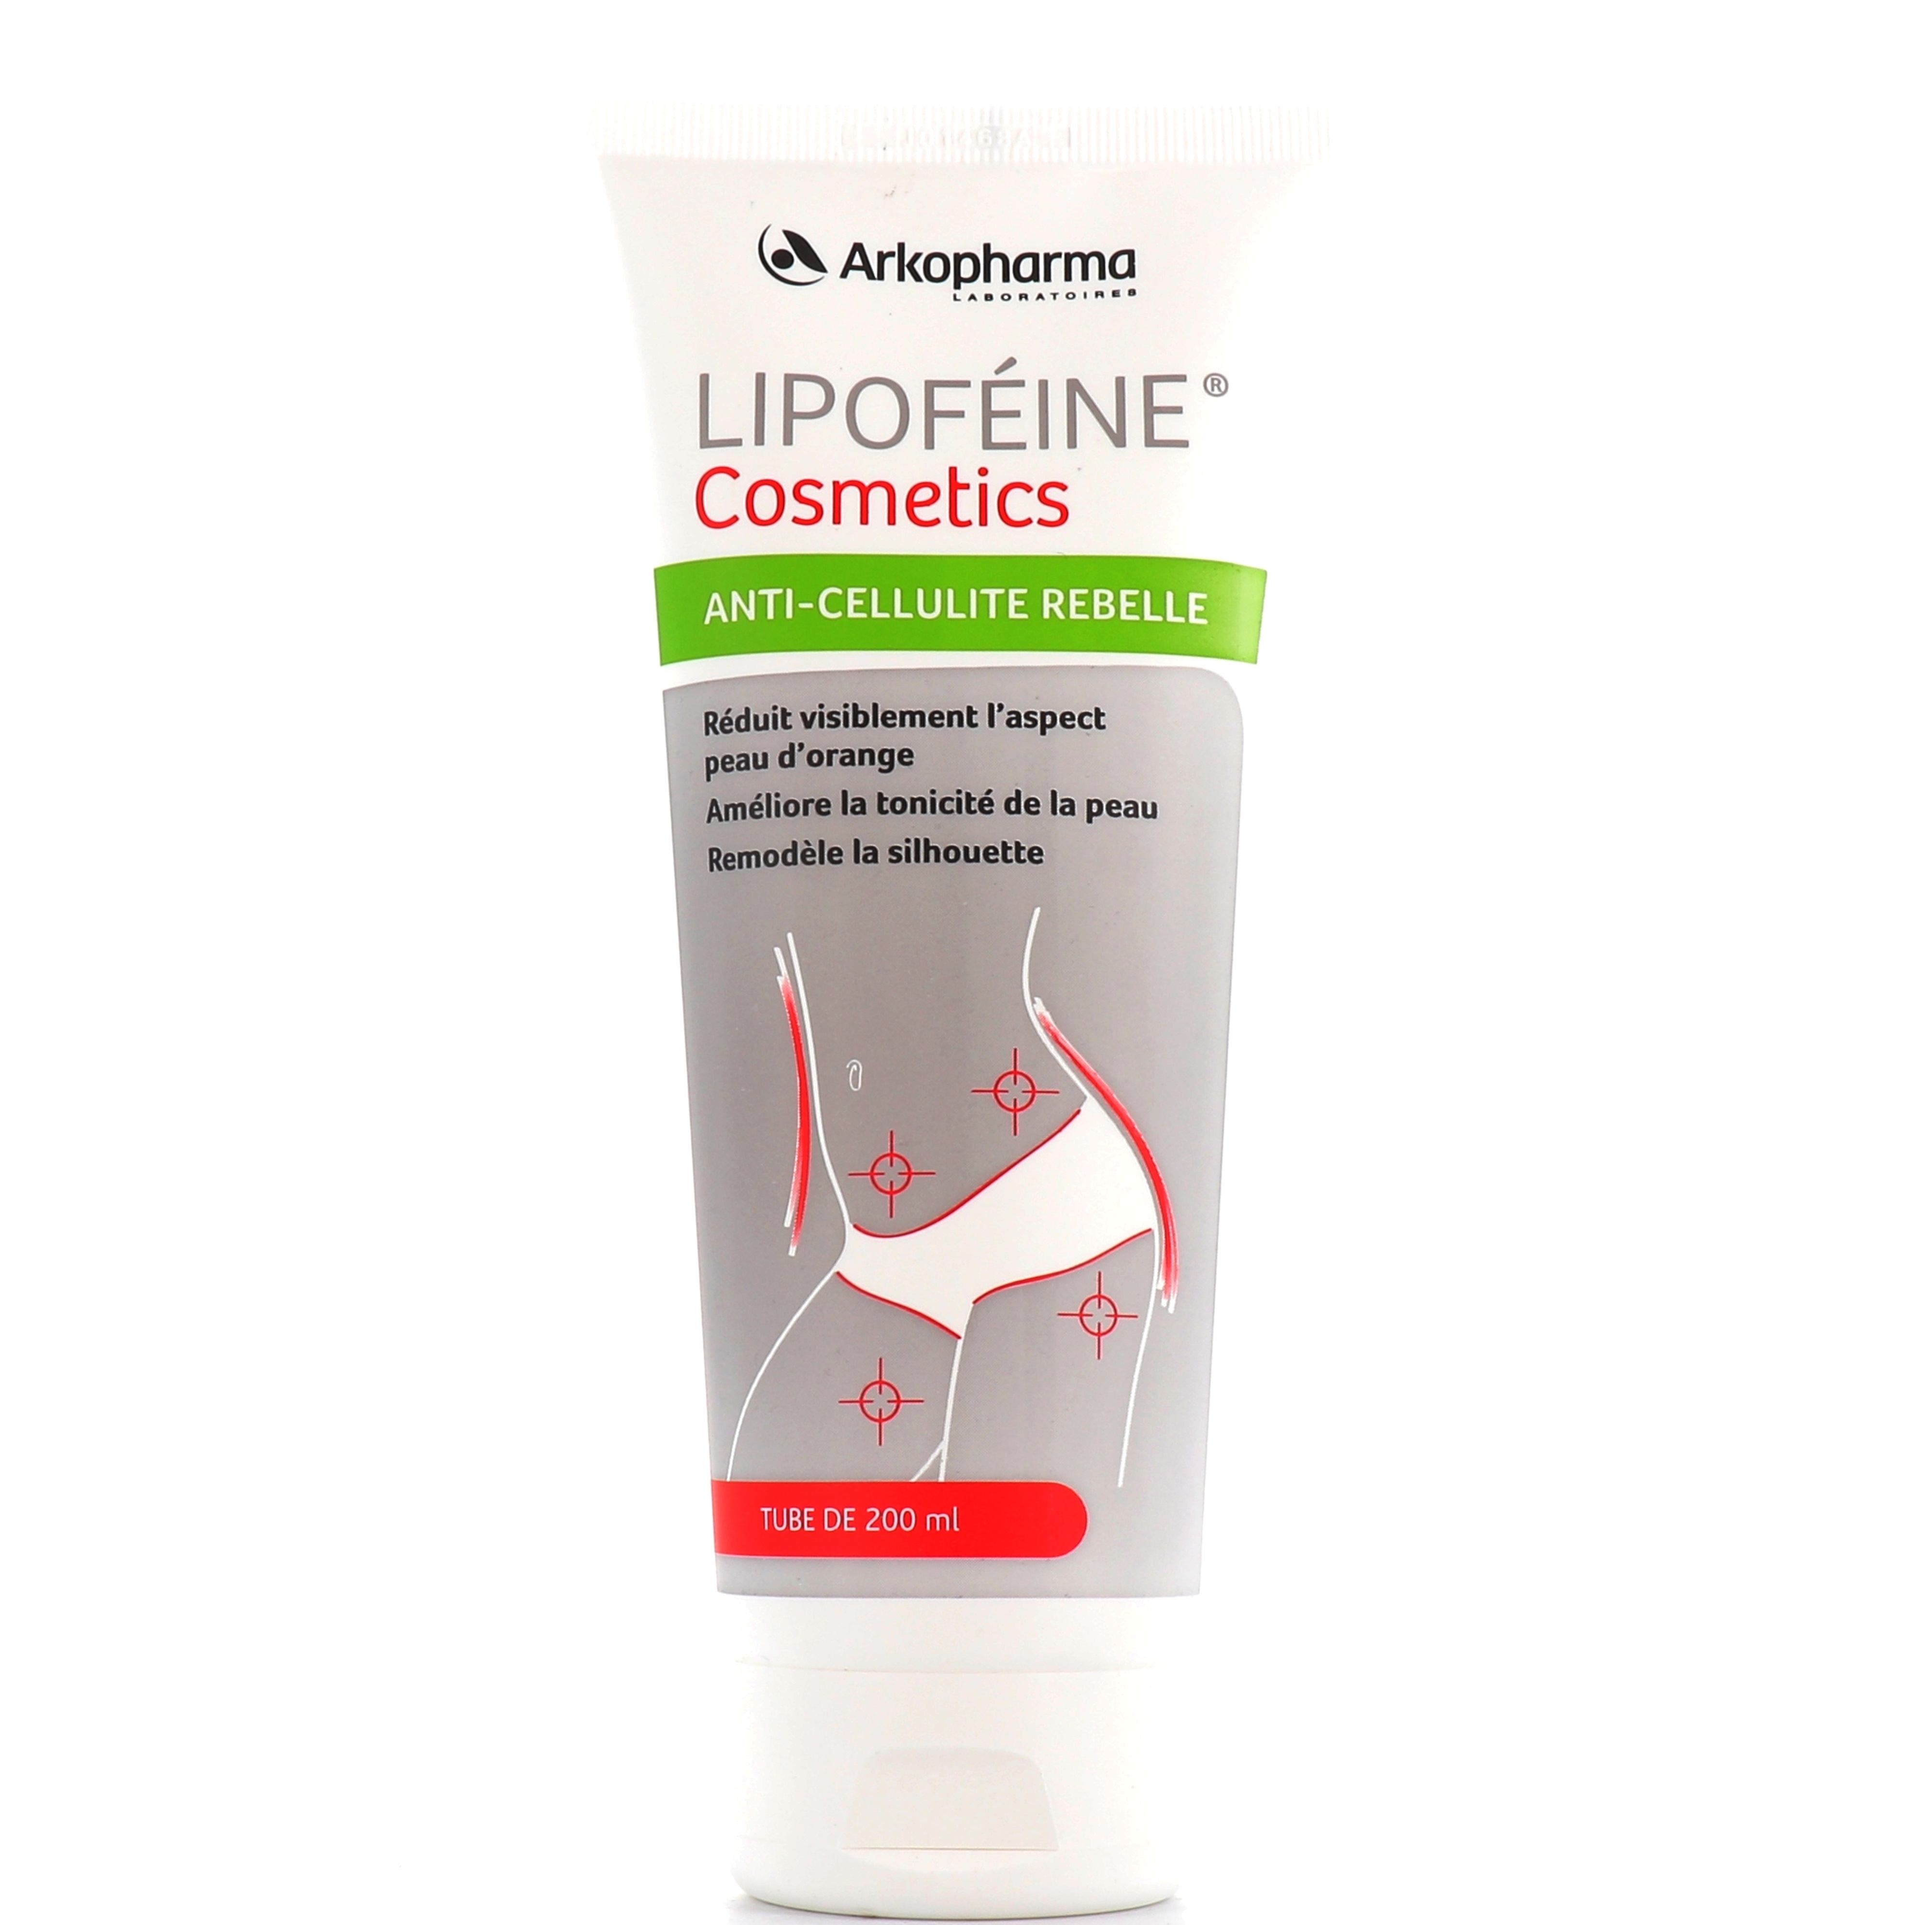 Arkopharma Lipoféine cosmetics gel anti-cellulite rebelle 200 ml